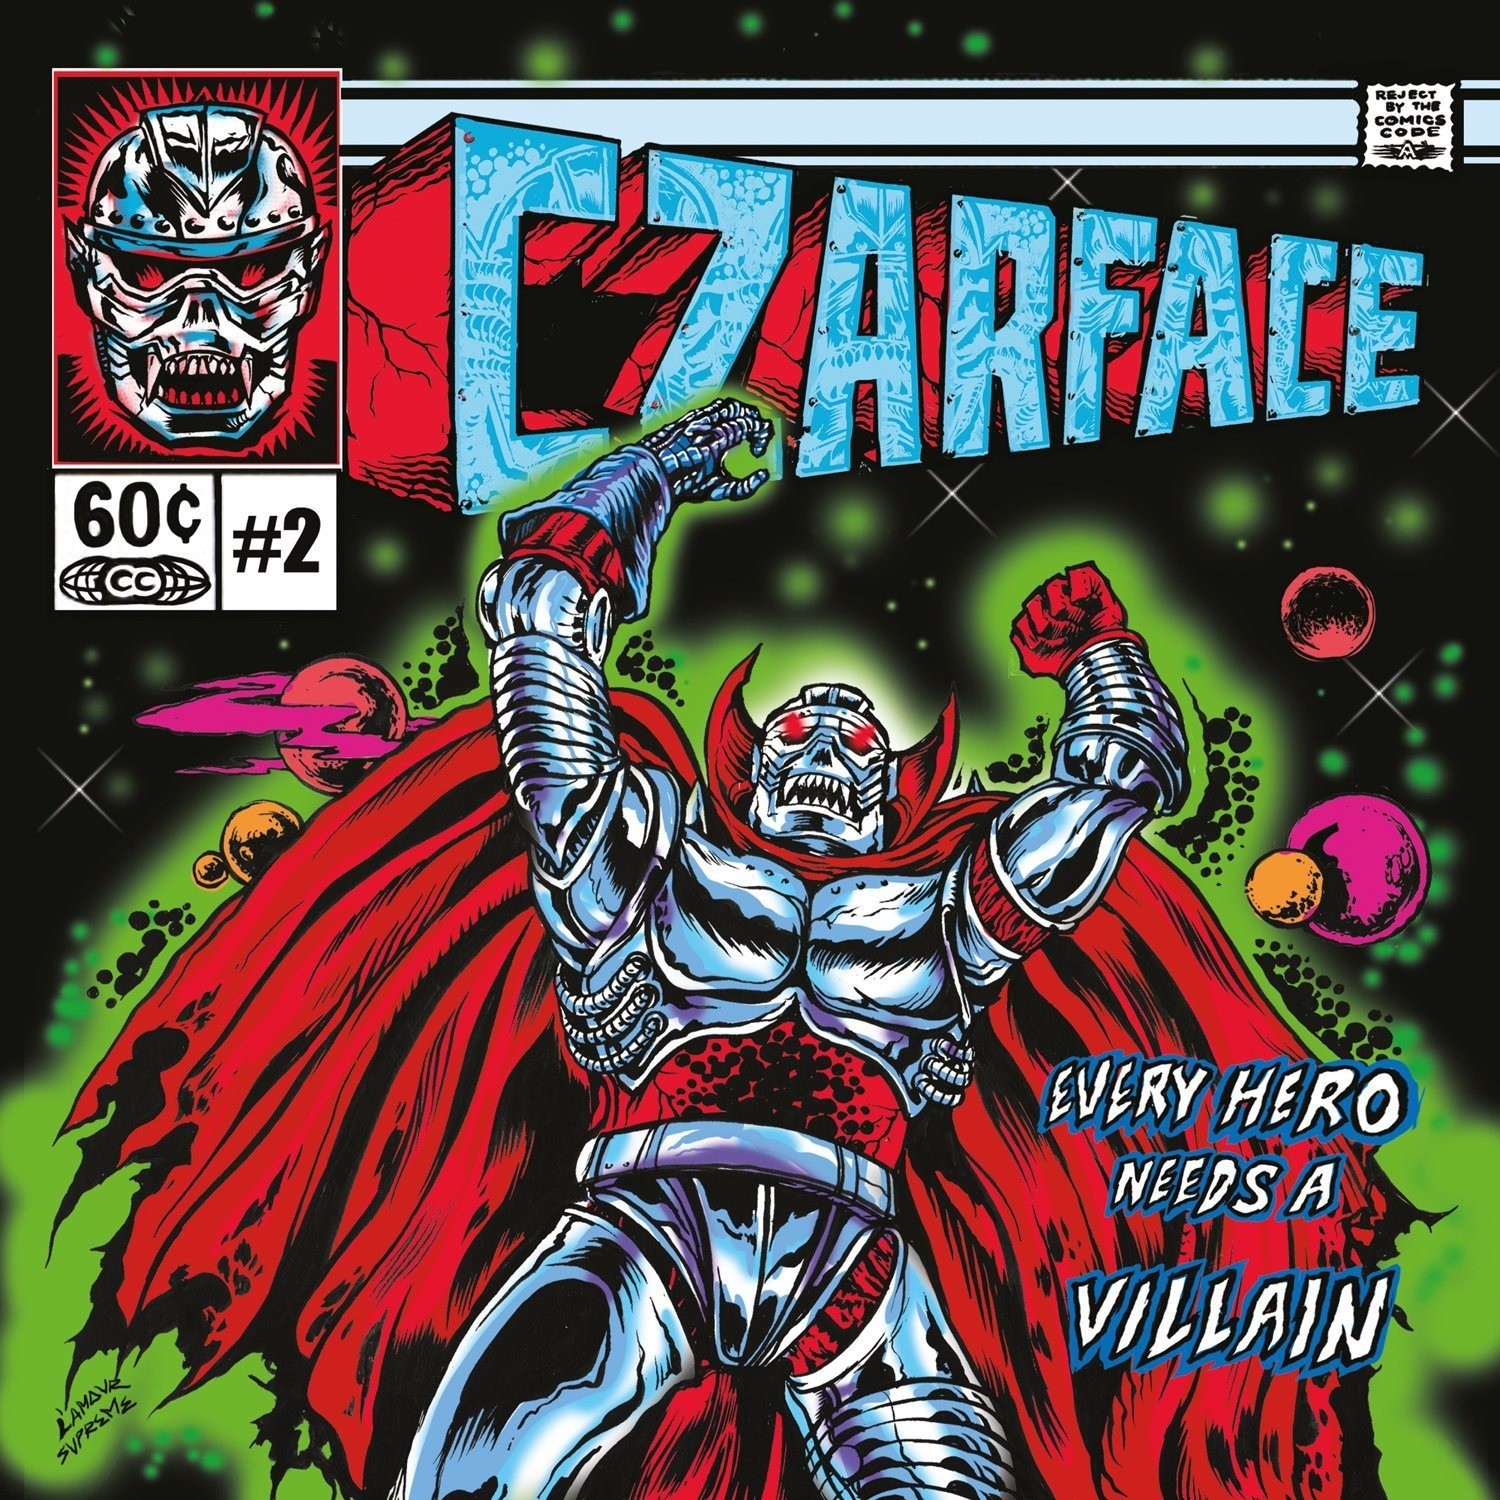 Brick Czarface / Inspectah Deck & 7L & Esoteric - Every Hero Needs a  Villain LP